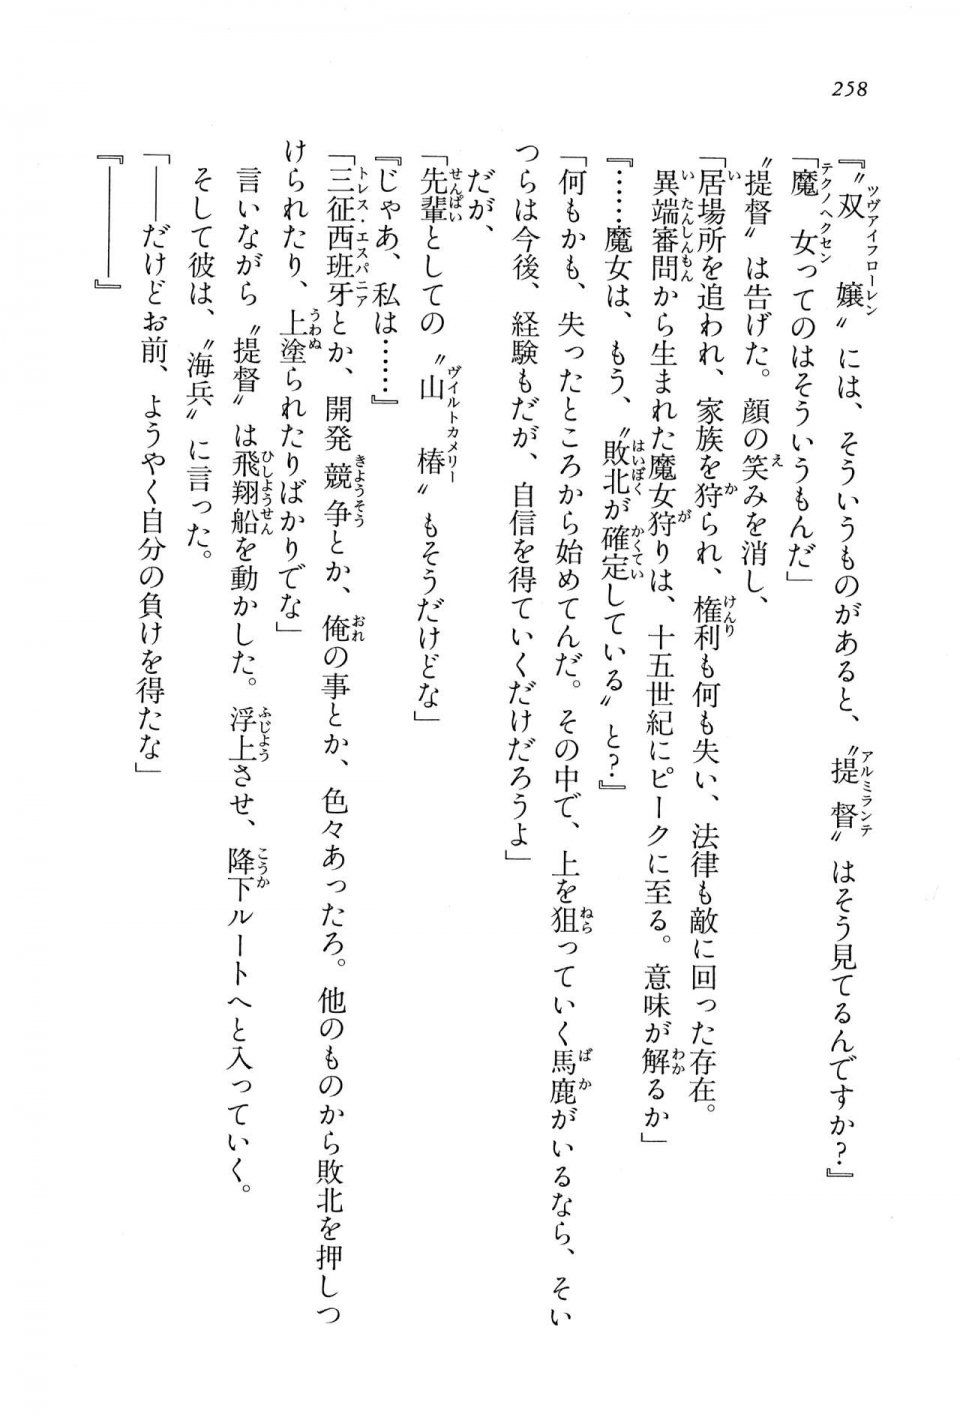 Kyoukai Senjou no Horizon BD Special Mininovel Vol 6(3B) - Photo #262